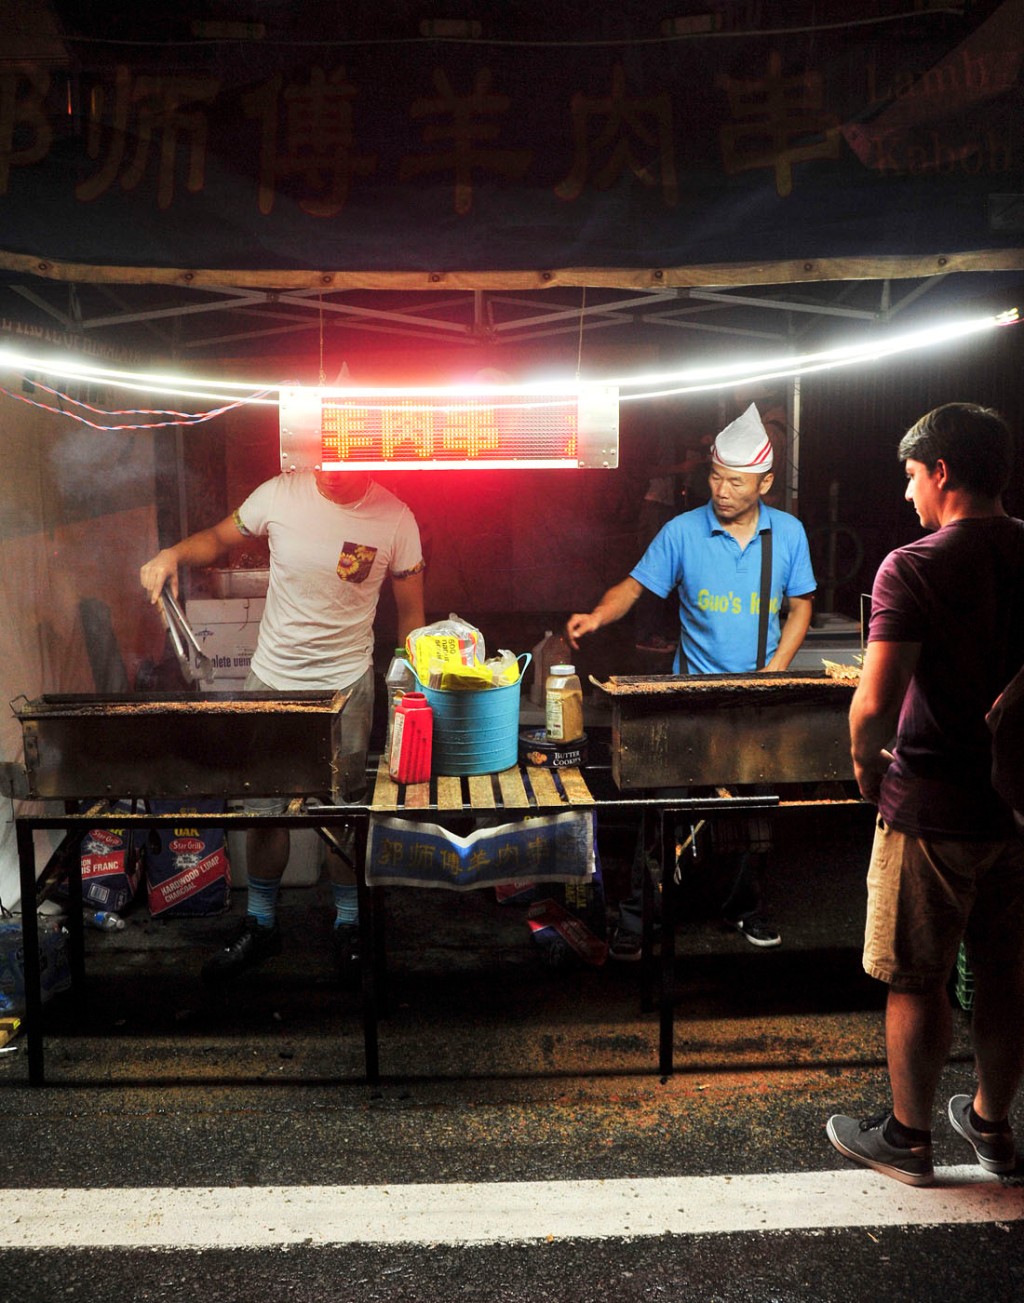 Asian Night Market